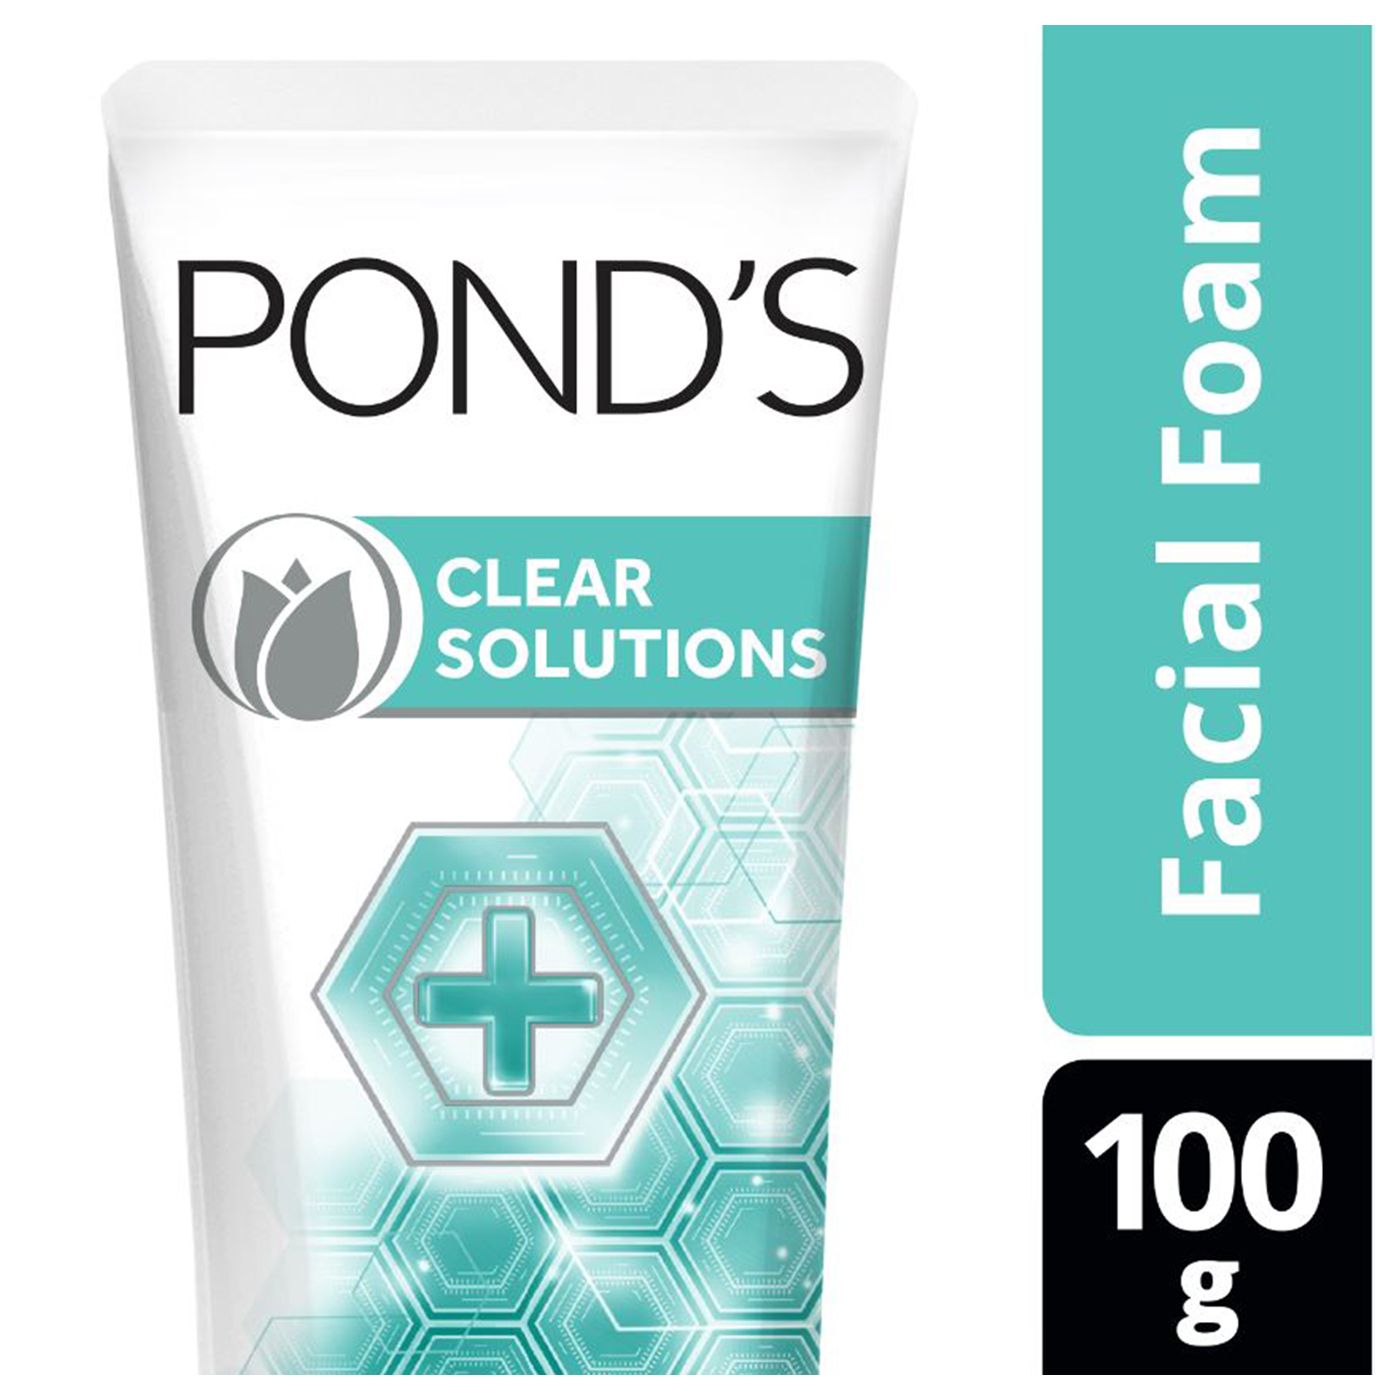 Ponds Clear Solution Scrub Pembersih Wajah 100g - 1